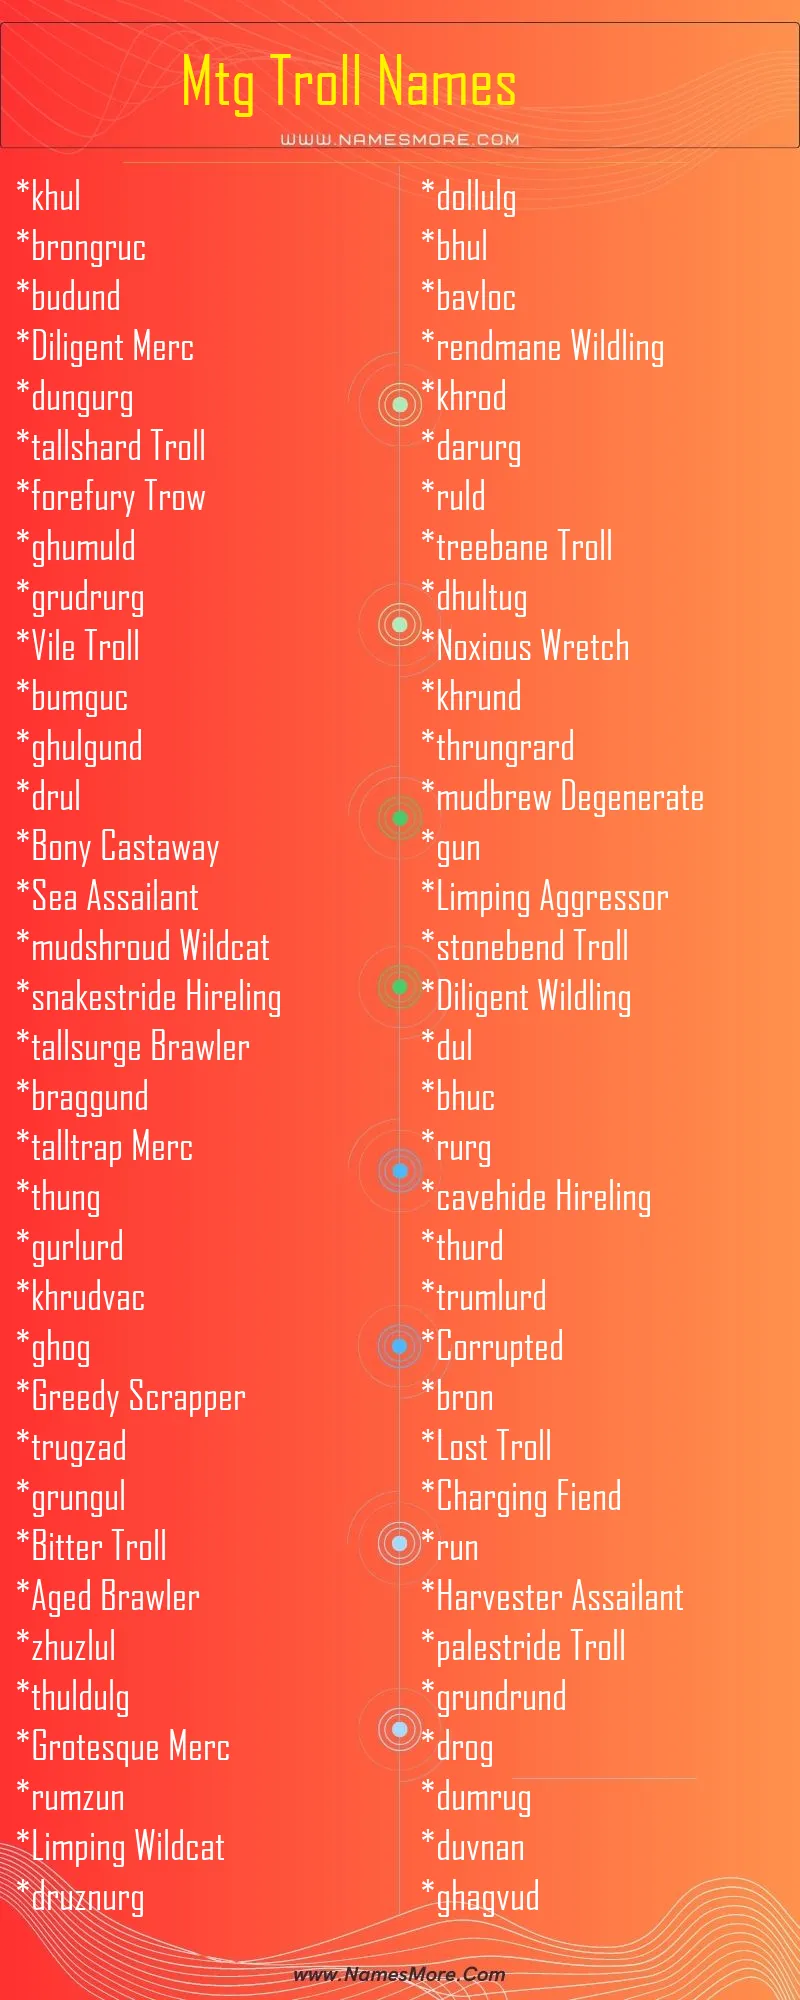 2600+ Mtg Troll Names (Creative & Cool) List Infographic